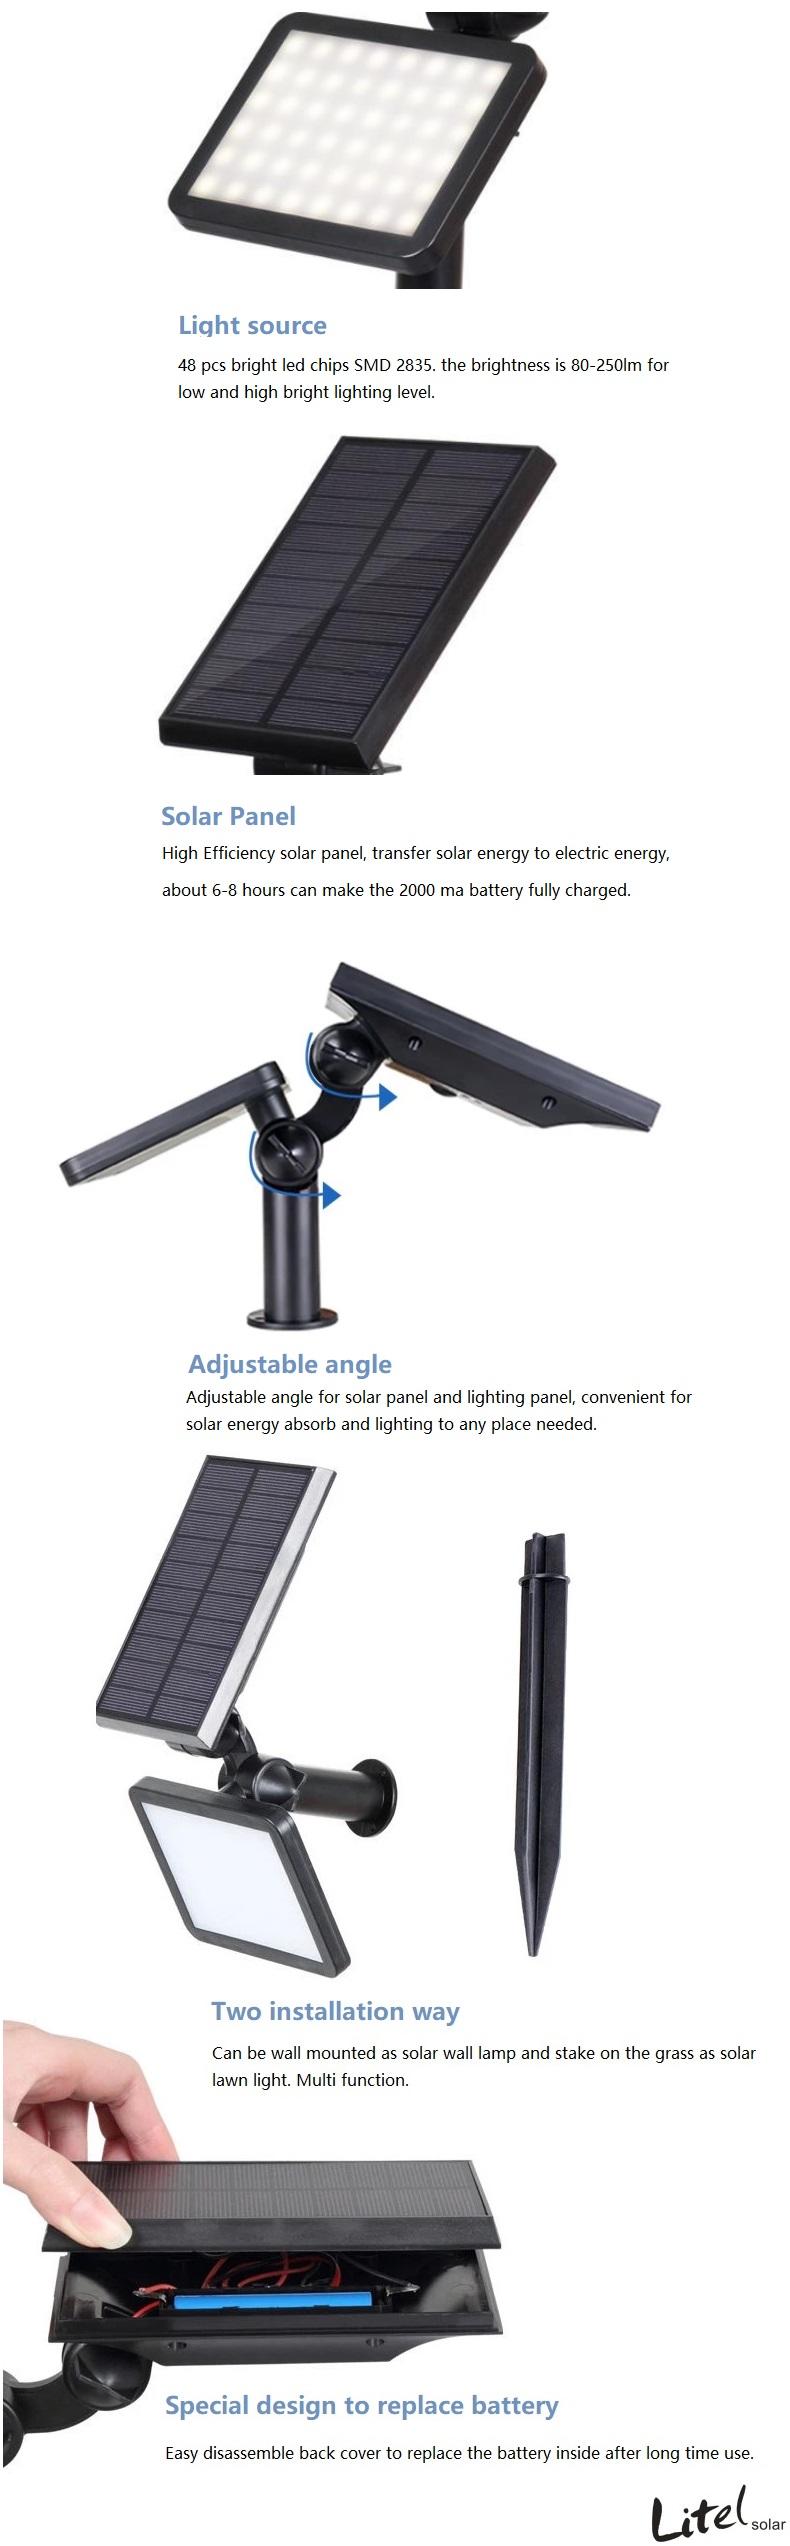 Litel Technology mounting solar garden lights step for lawn-2